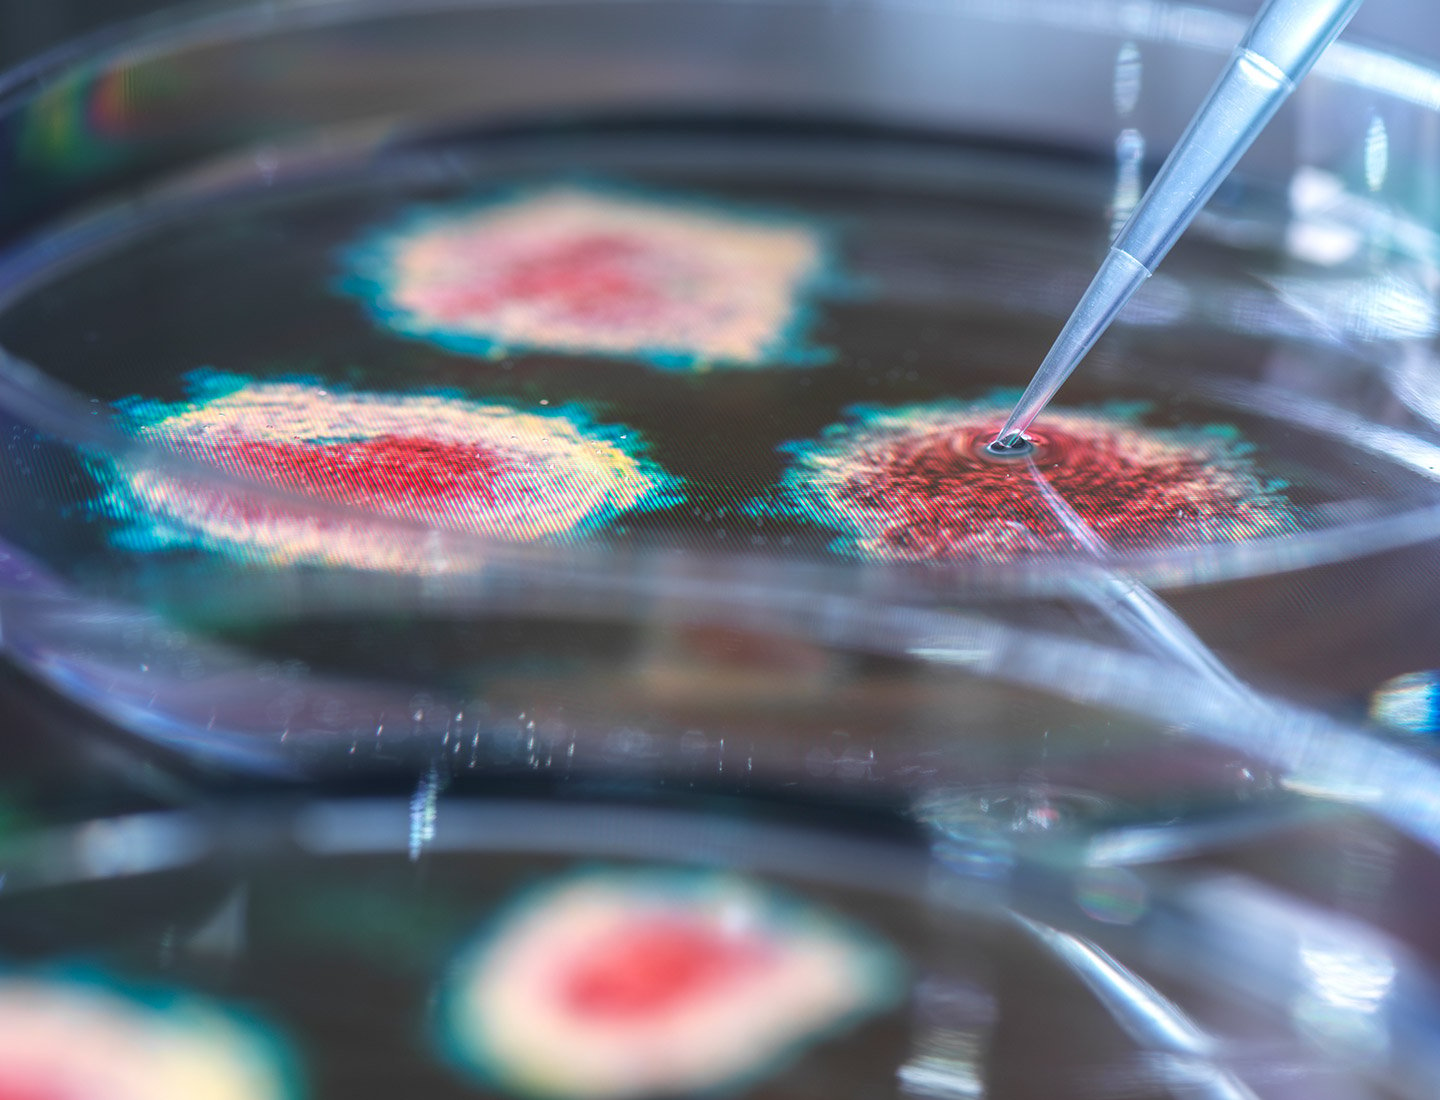 Bacteria in a Petri dish.